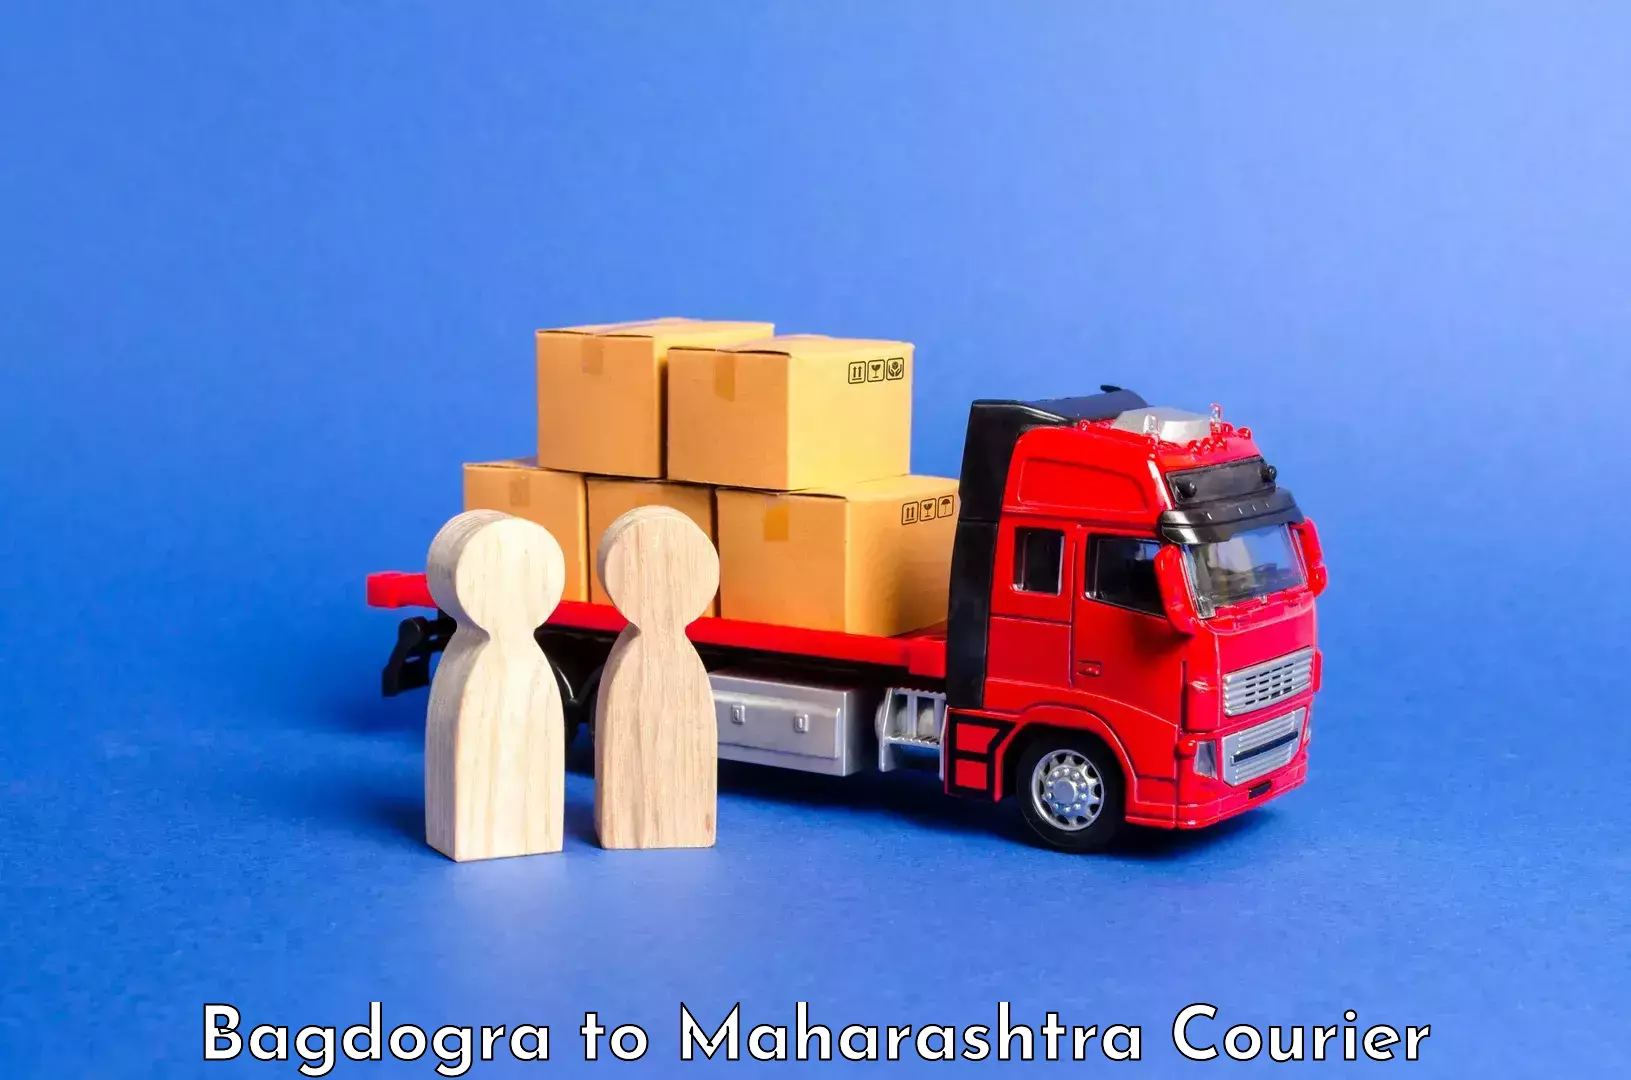 Baggage delivery optimization Bagdogra to Maharashtra